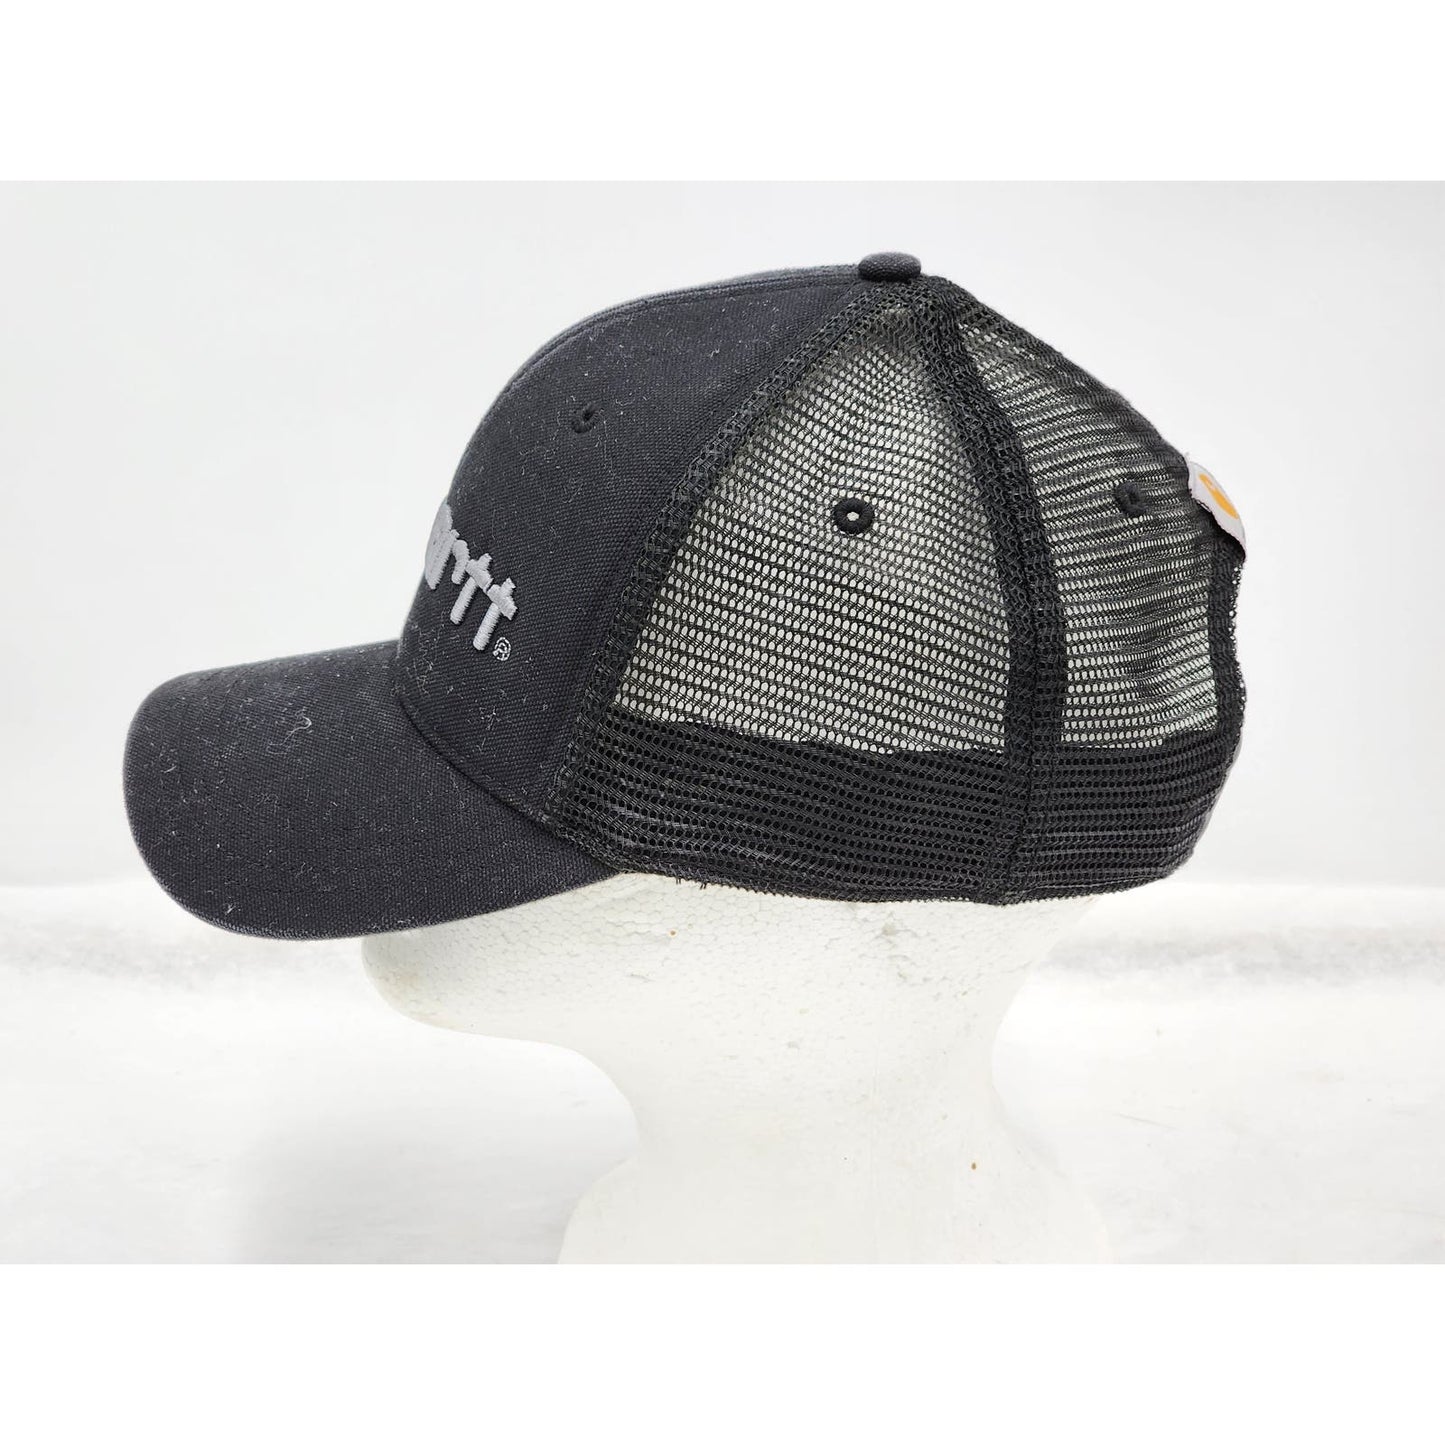 Carhartt Hat Trucker Cap Mesh Back Black Embroidered Logo Headwear Snapback